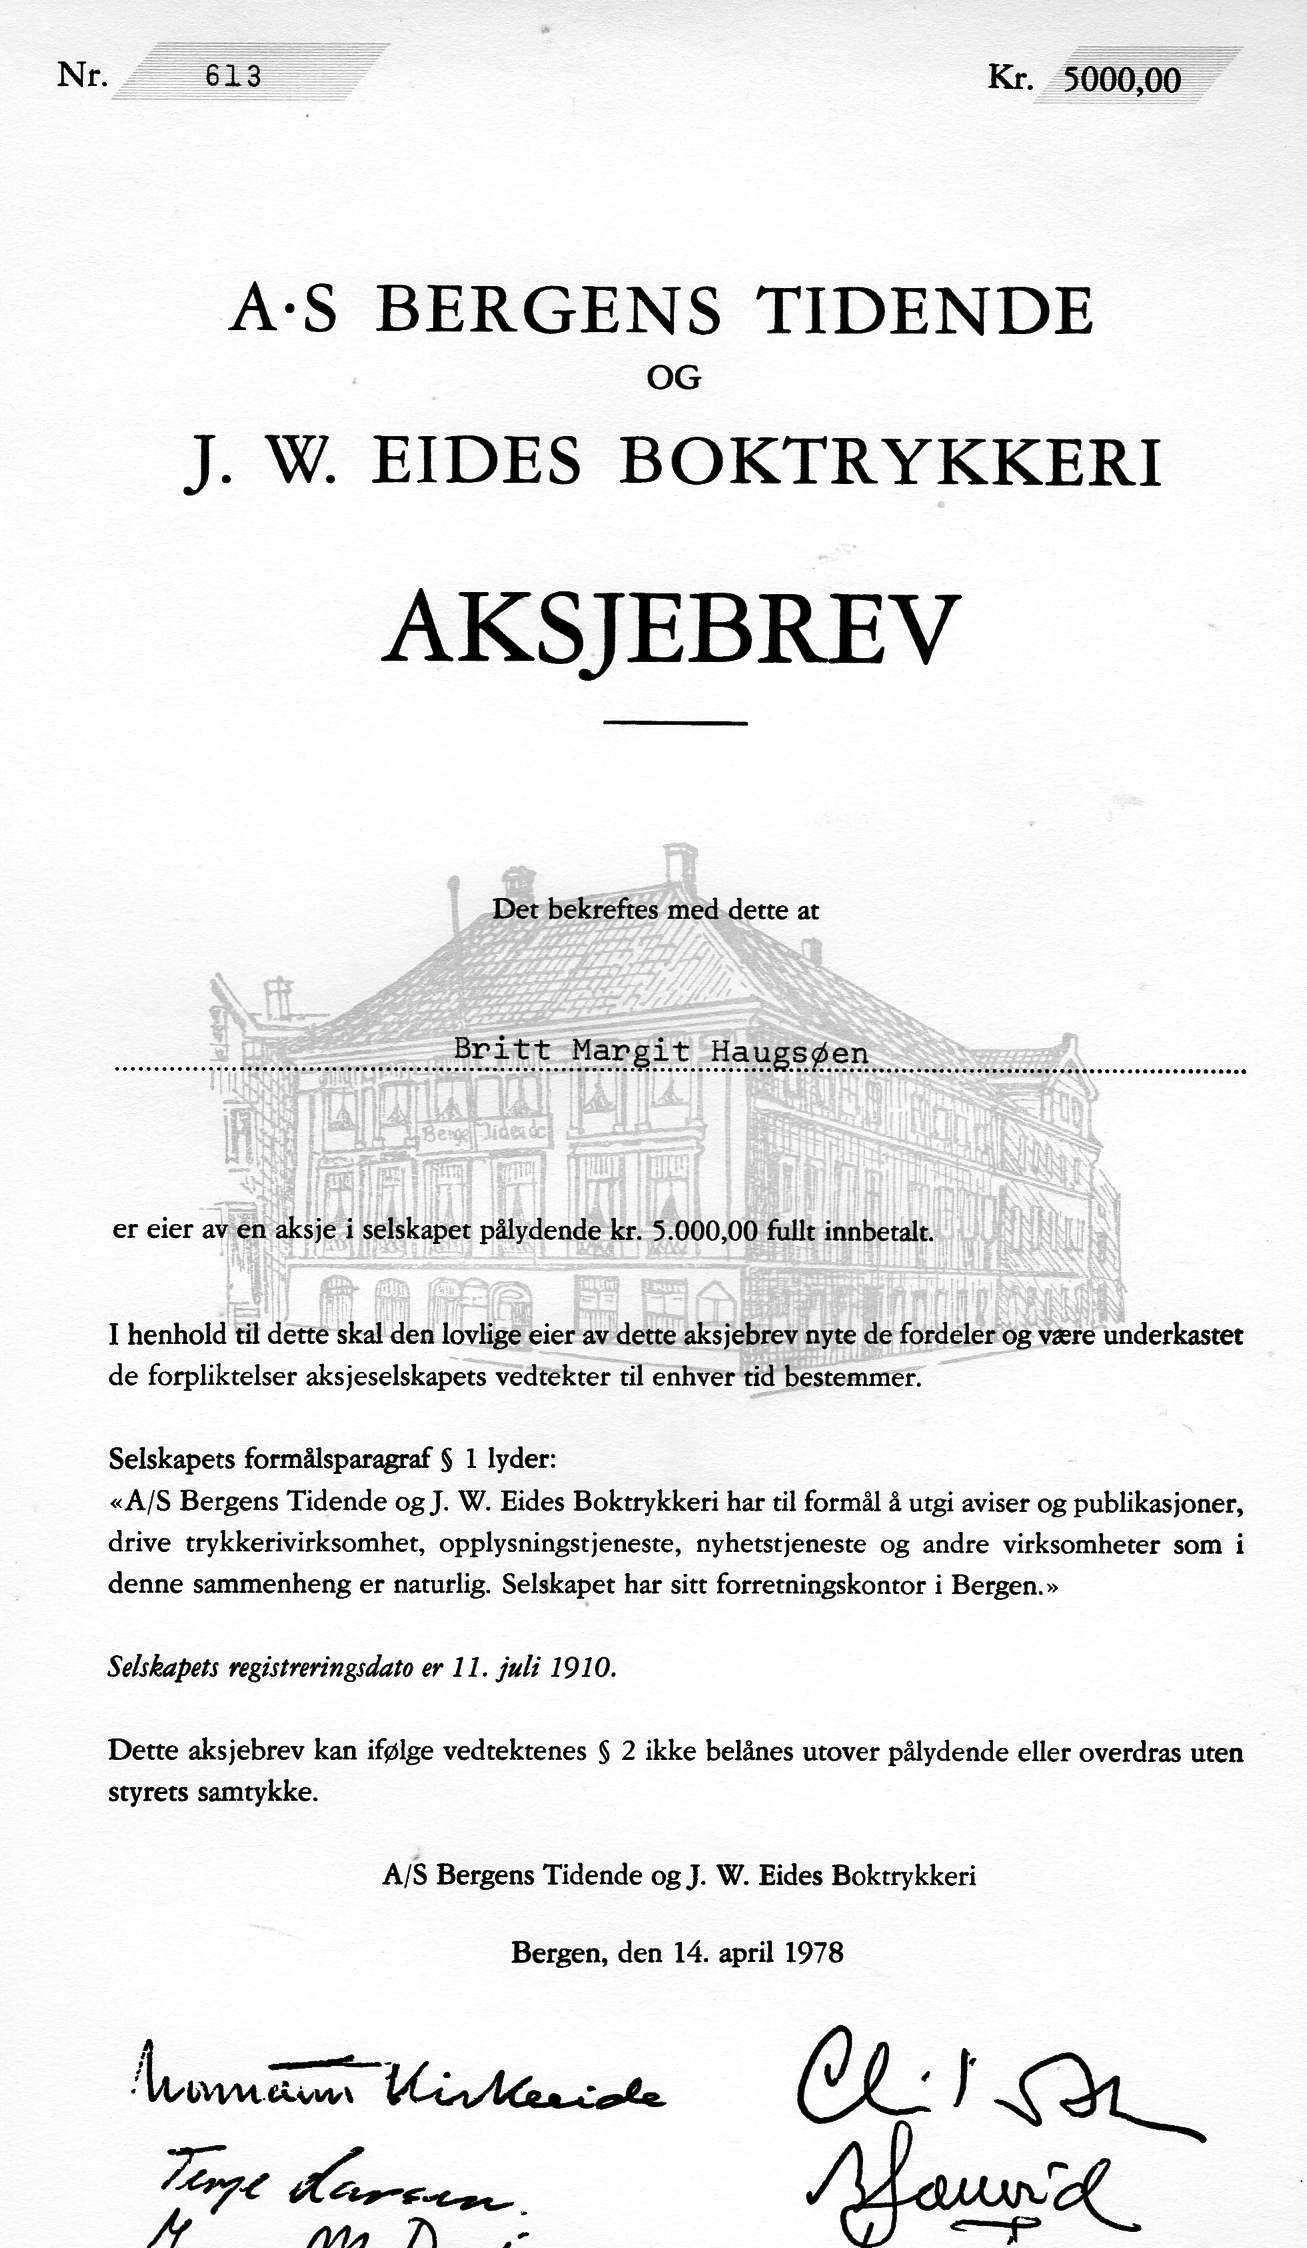 Bergens tidende /Eides boktrykkeri  kr 5000 Bergen 1978 nr 607/606/605/614/613/612 pris pr stk